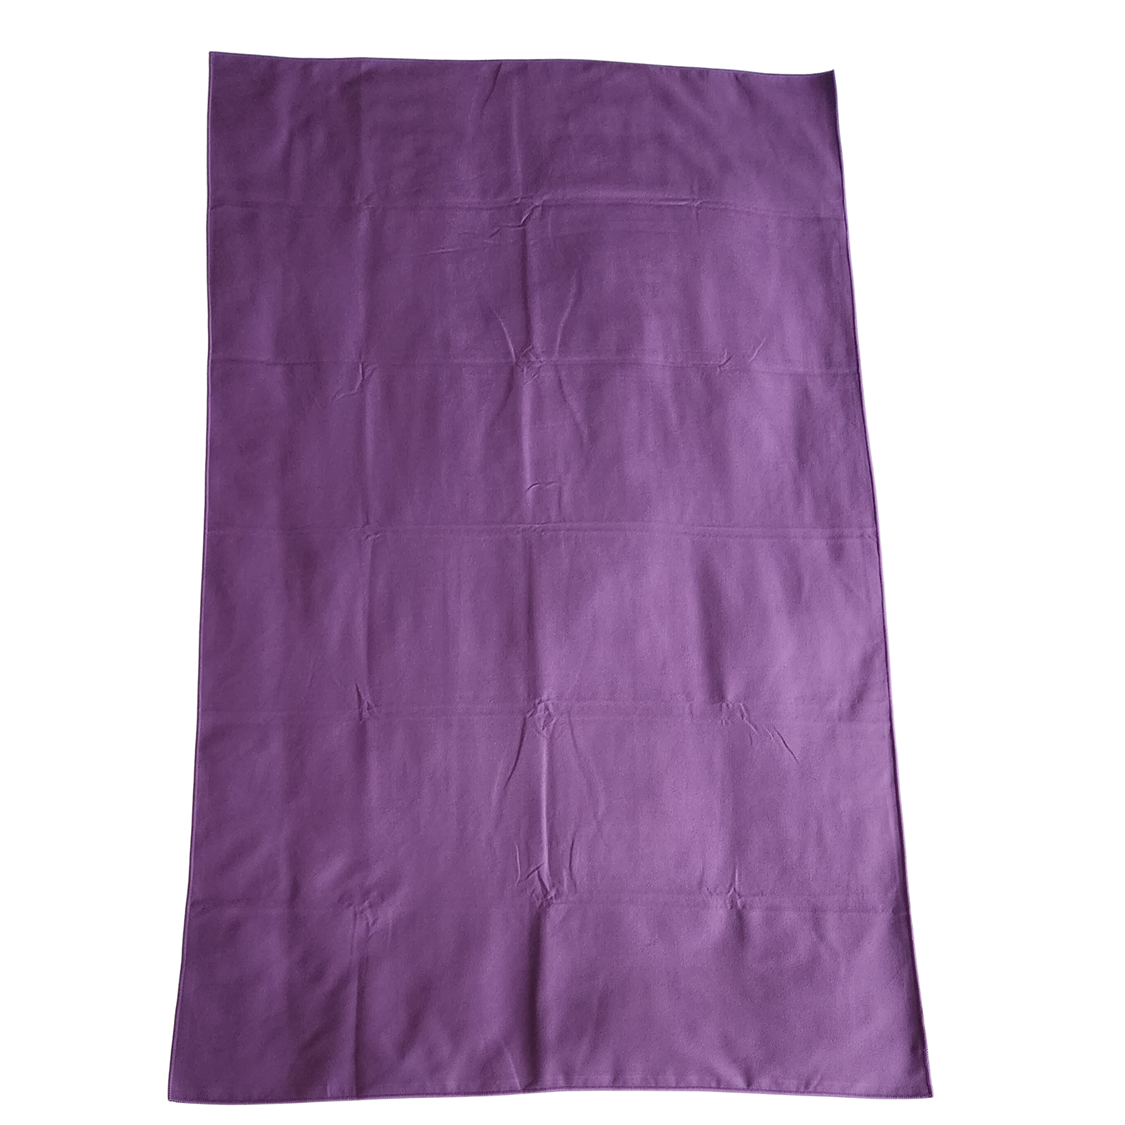 Adv towel purple 0257 (1)